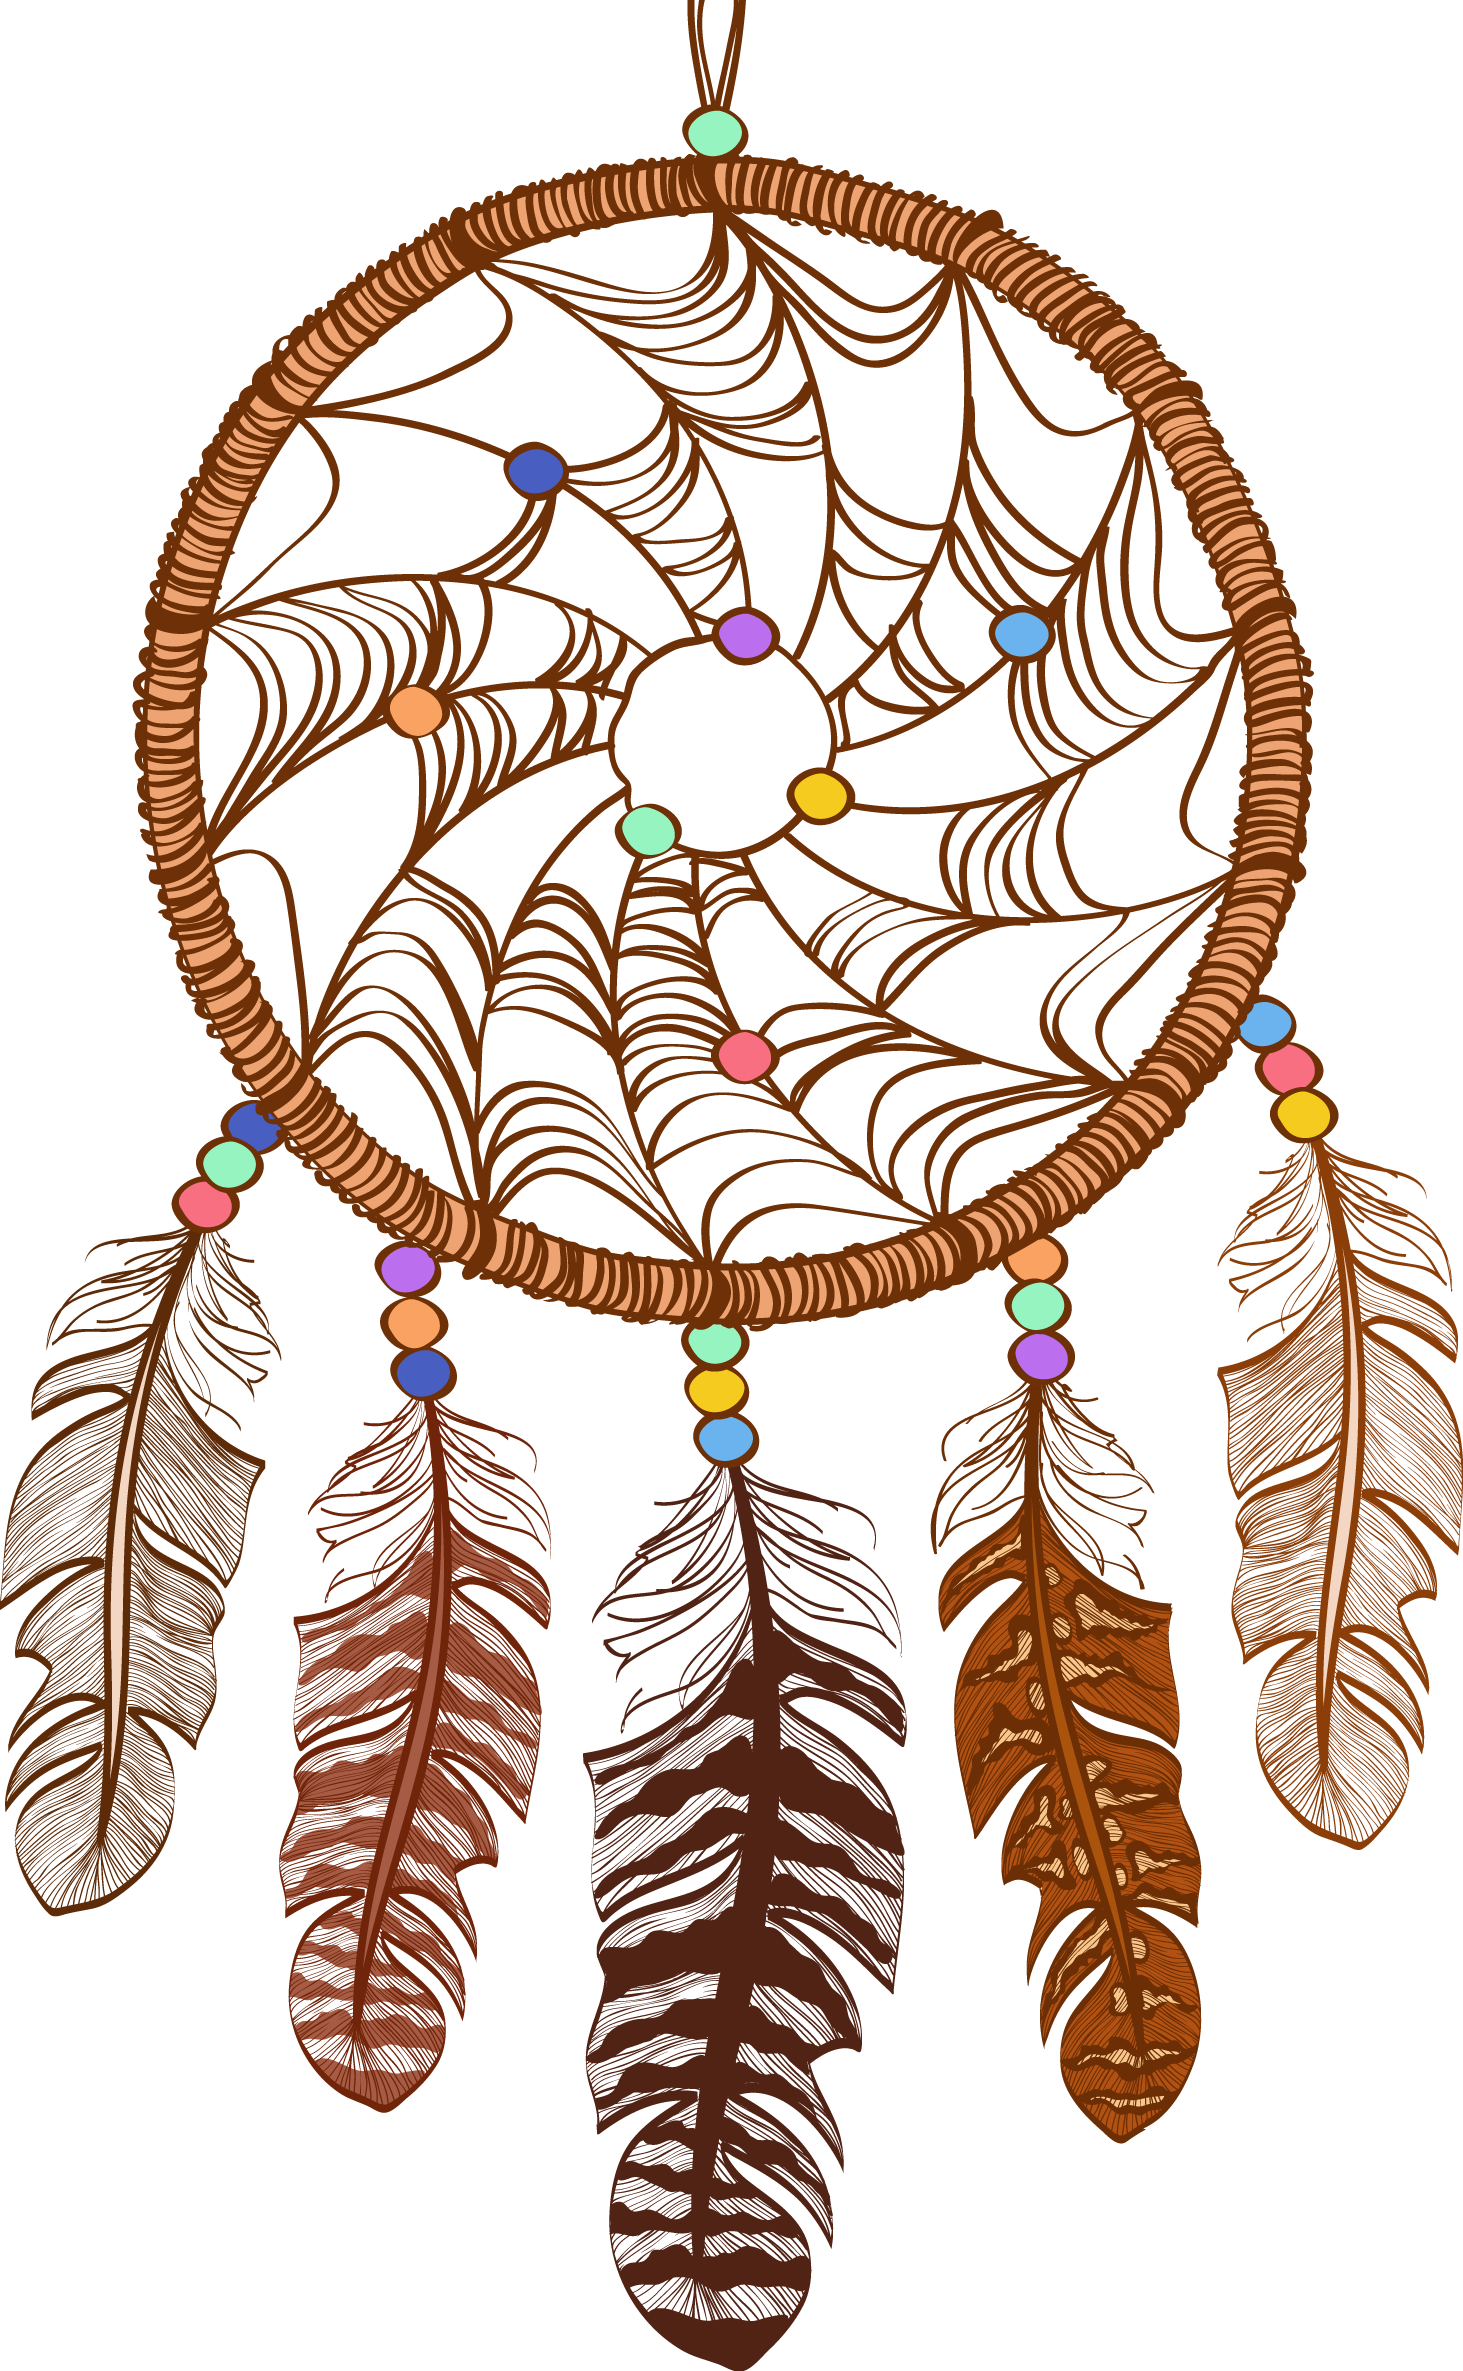 Tribe United Group Dreamcatcher Ethnic Illustration States PNG Image